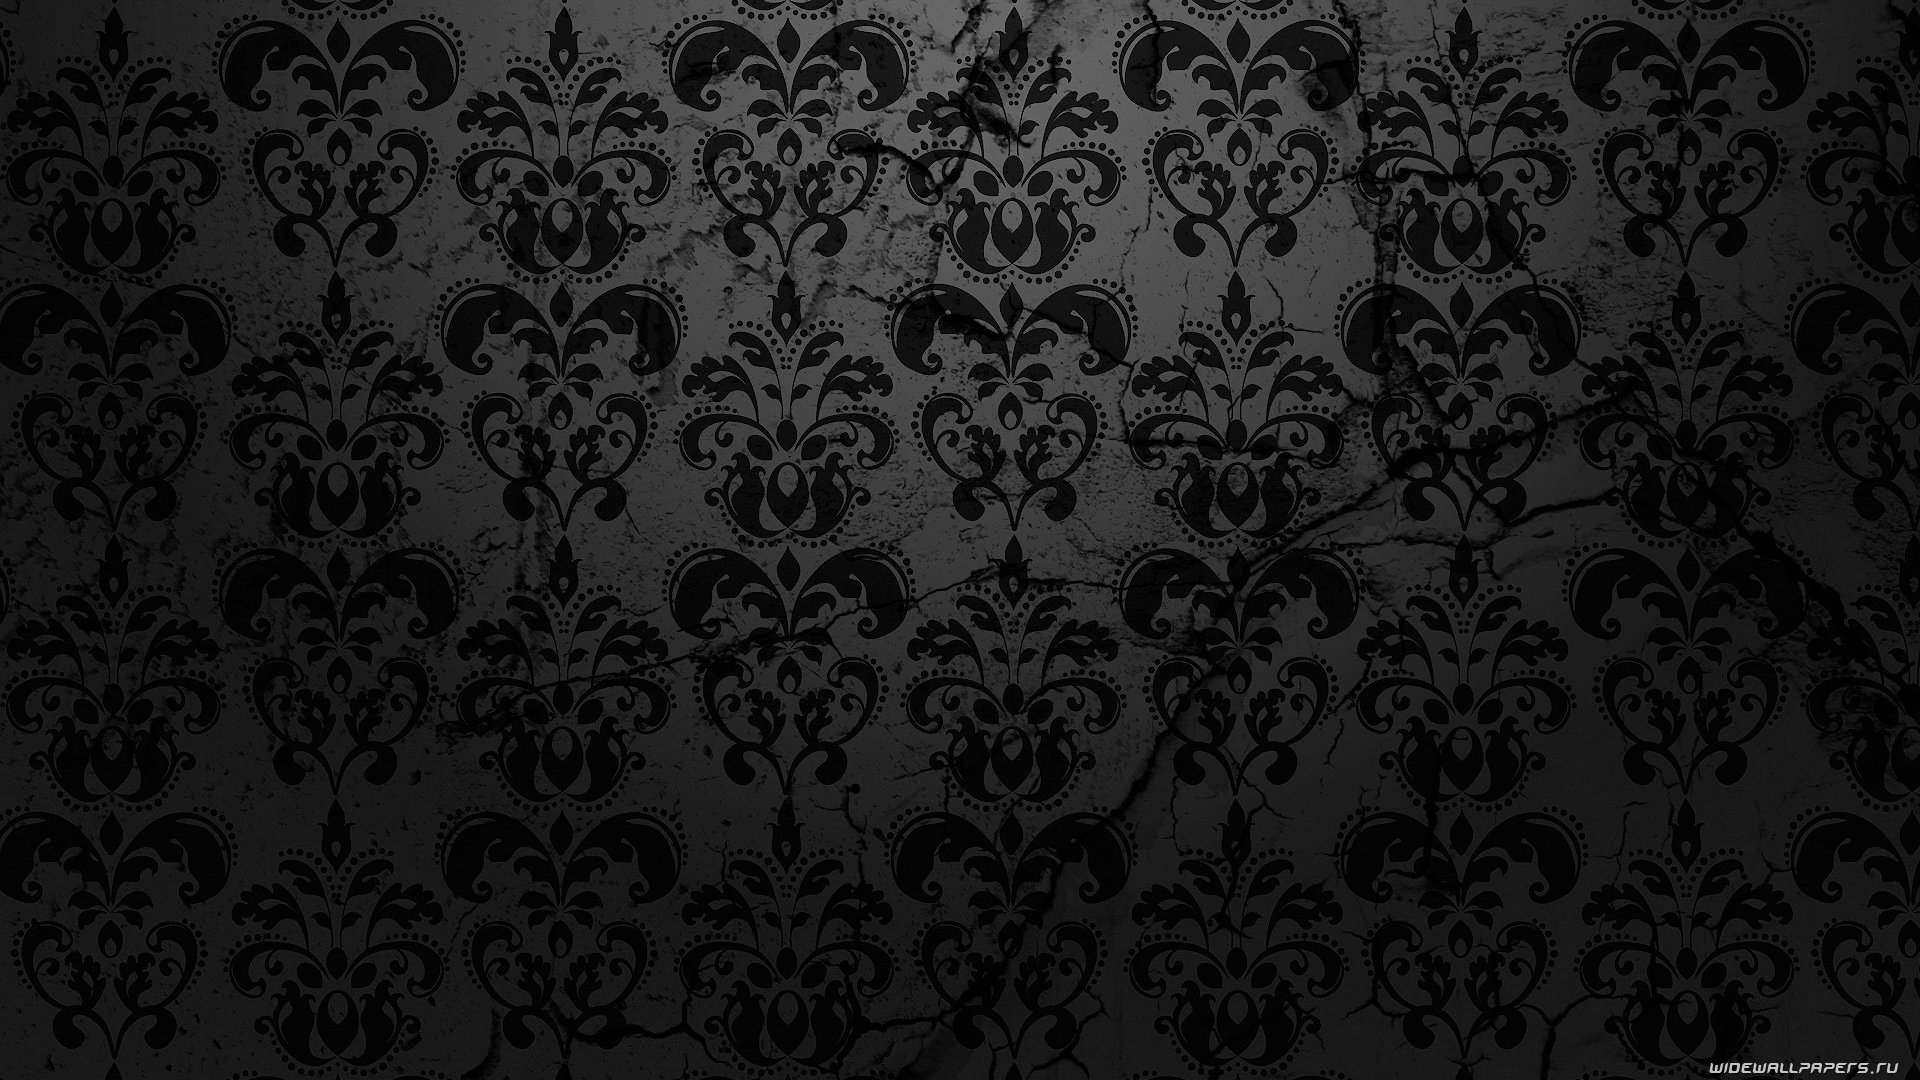 Ornate Black Lace Desktop Wallpaper